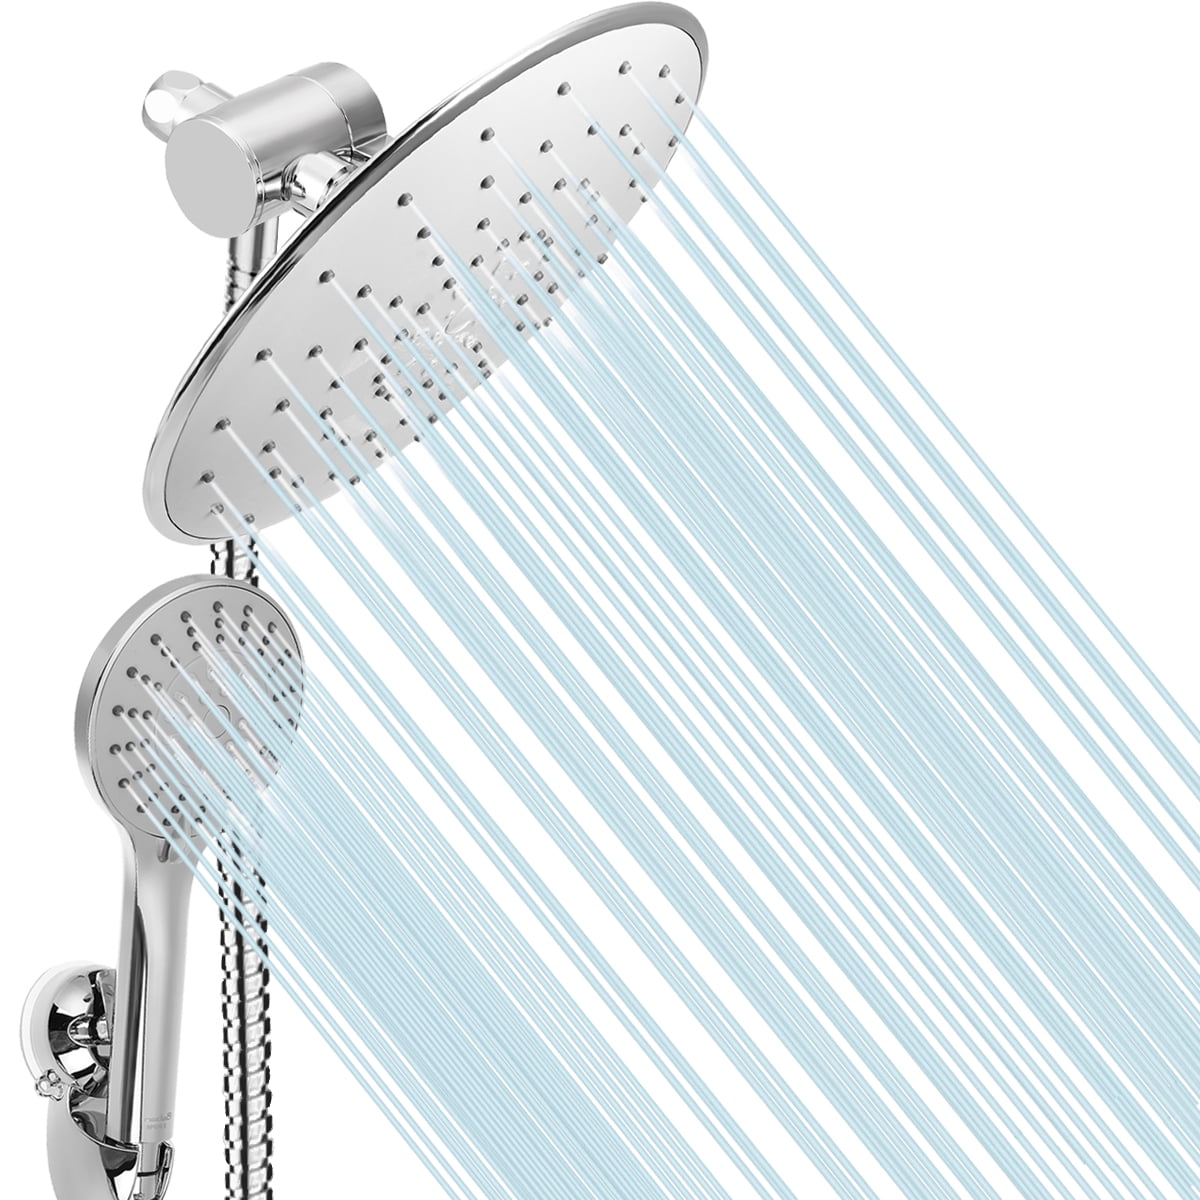 Details about   High Pressure Bathroom Shower Head 5 Setting Handheld Swivel Shower Head Hotel